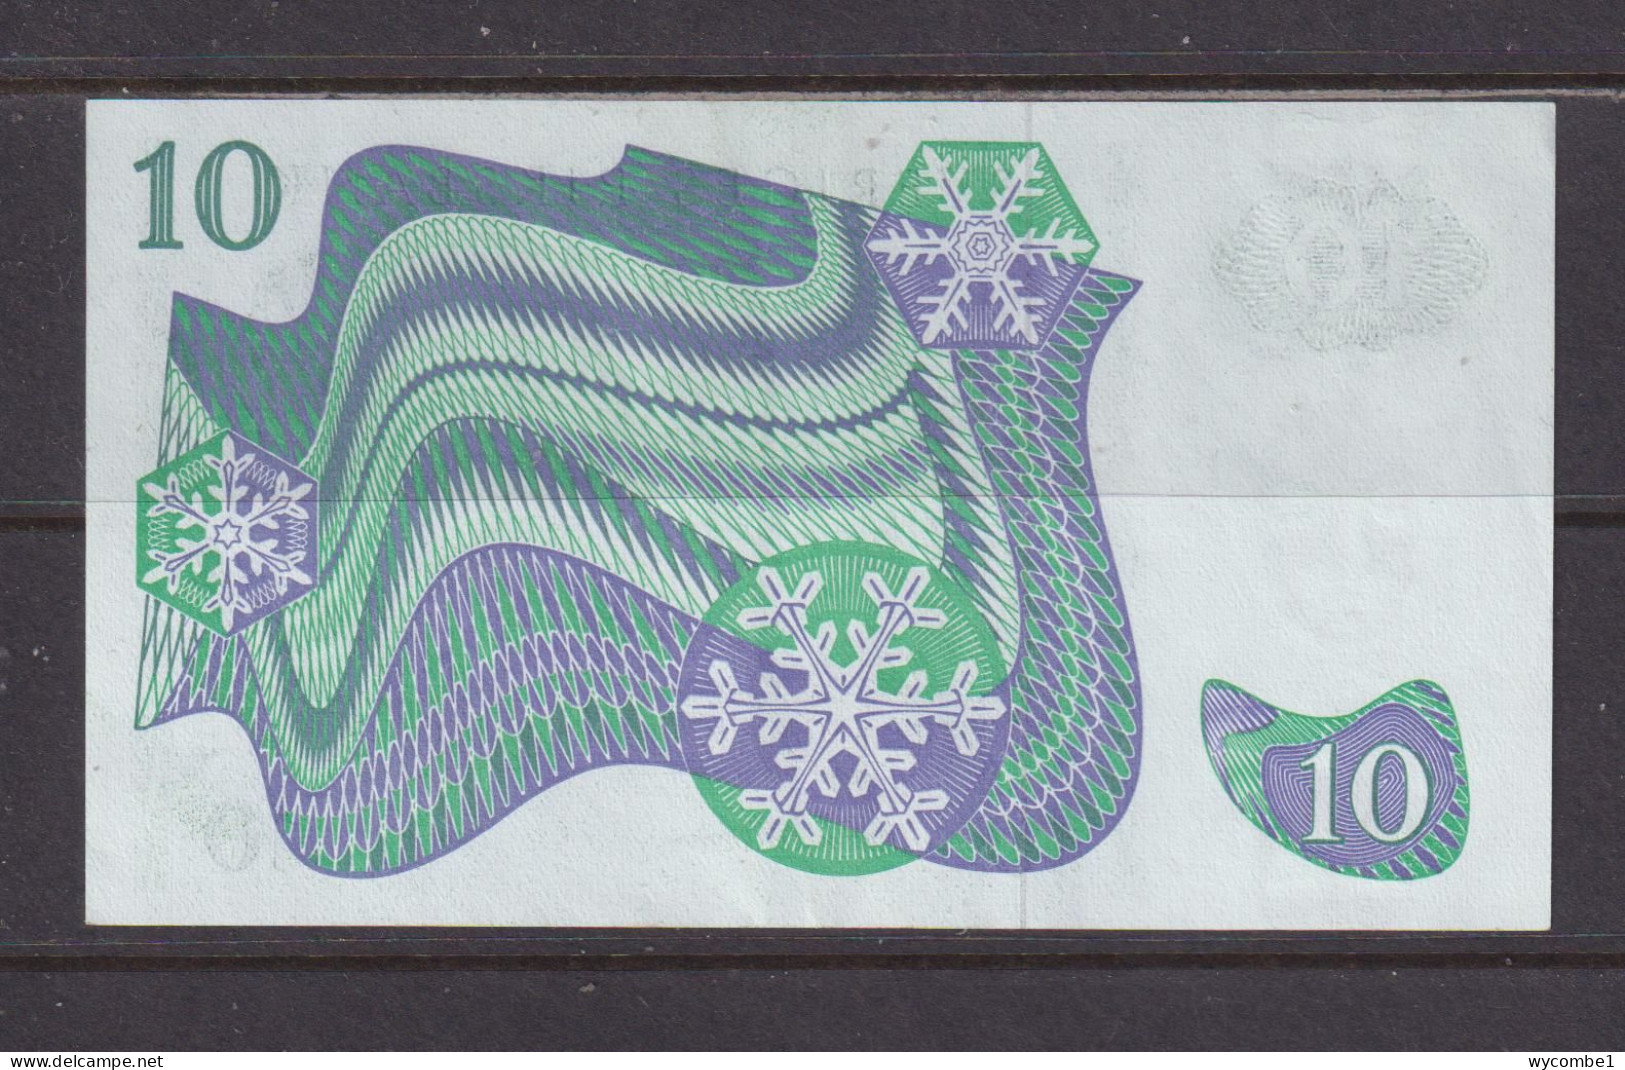 SWEDEN - 1976 10 Kronor AUNC/XF Banknote As Scans - Schweden